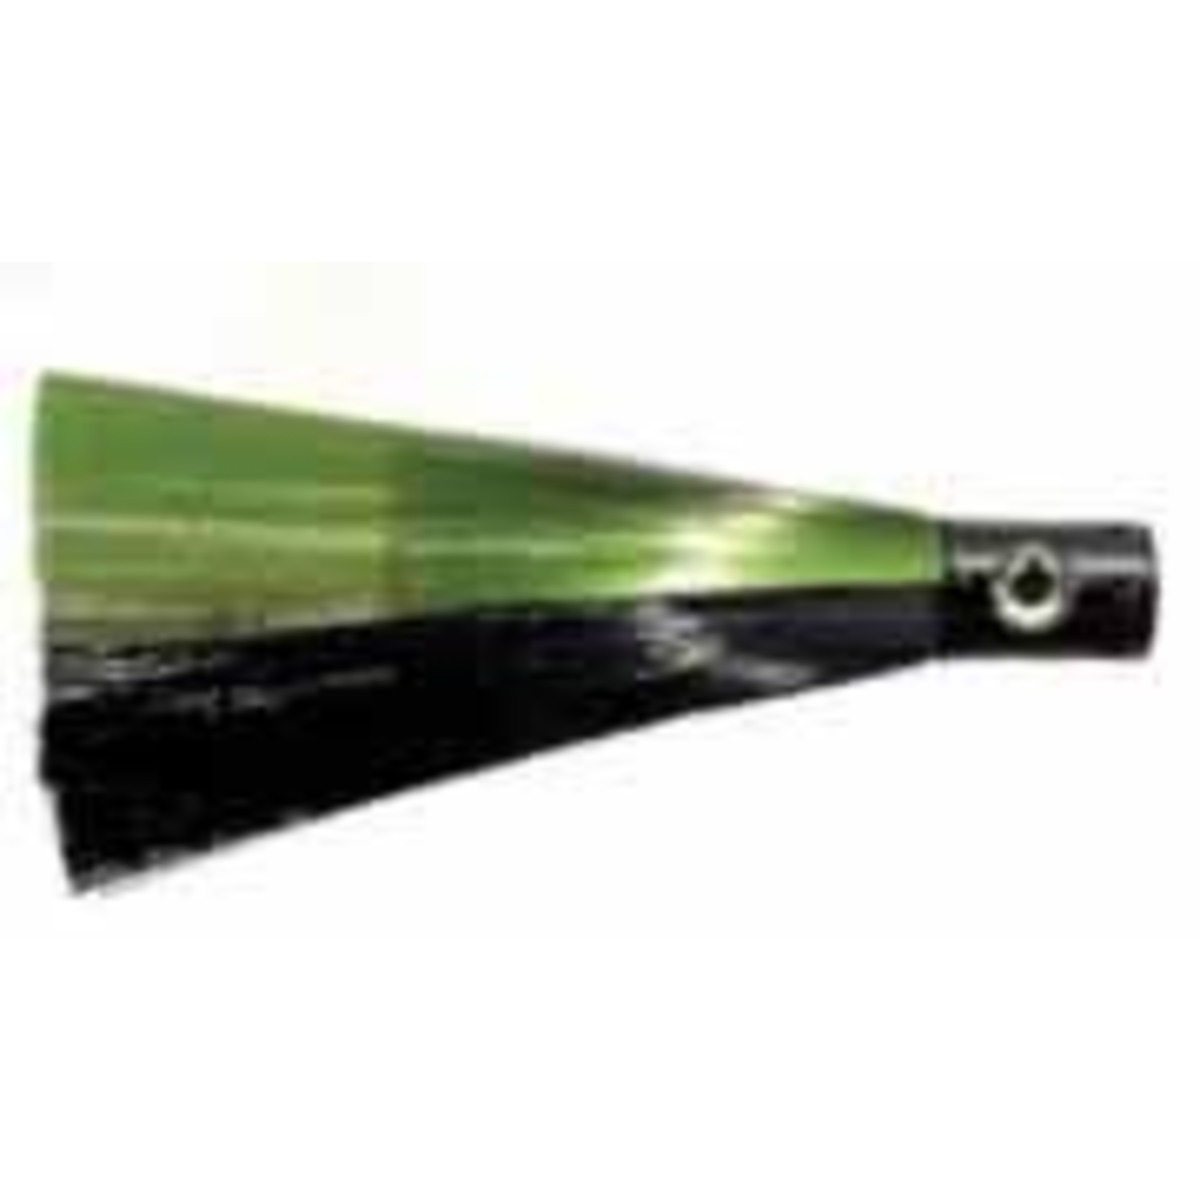 H2o Pro Express Lure - Black Green - 20 cm